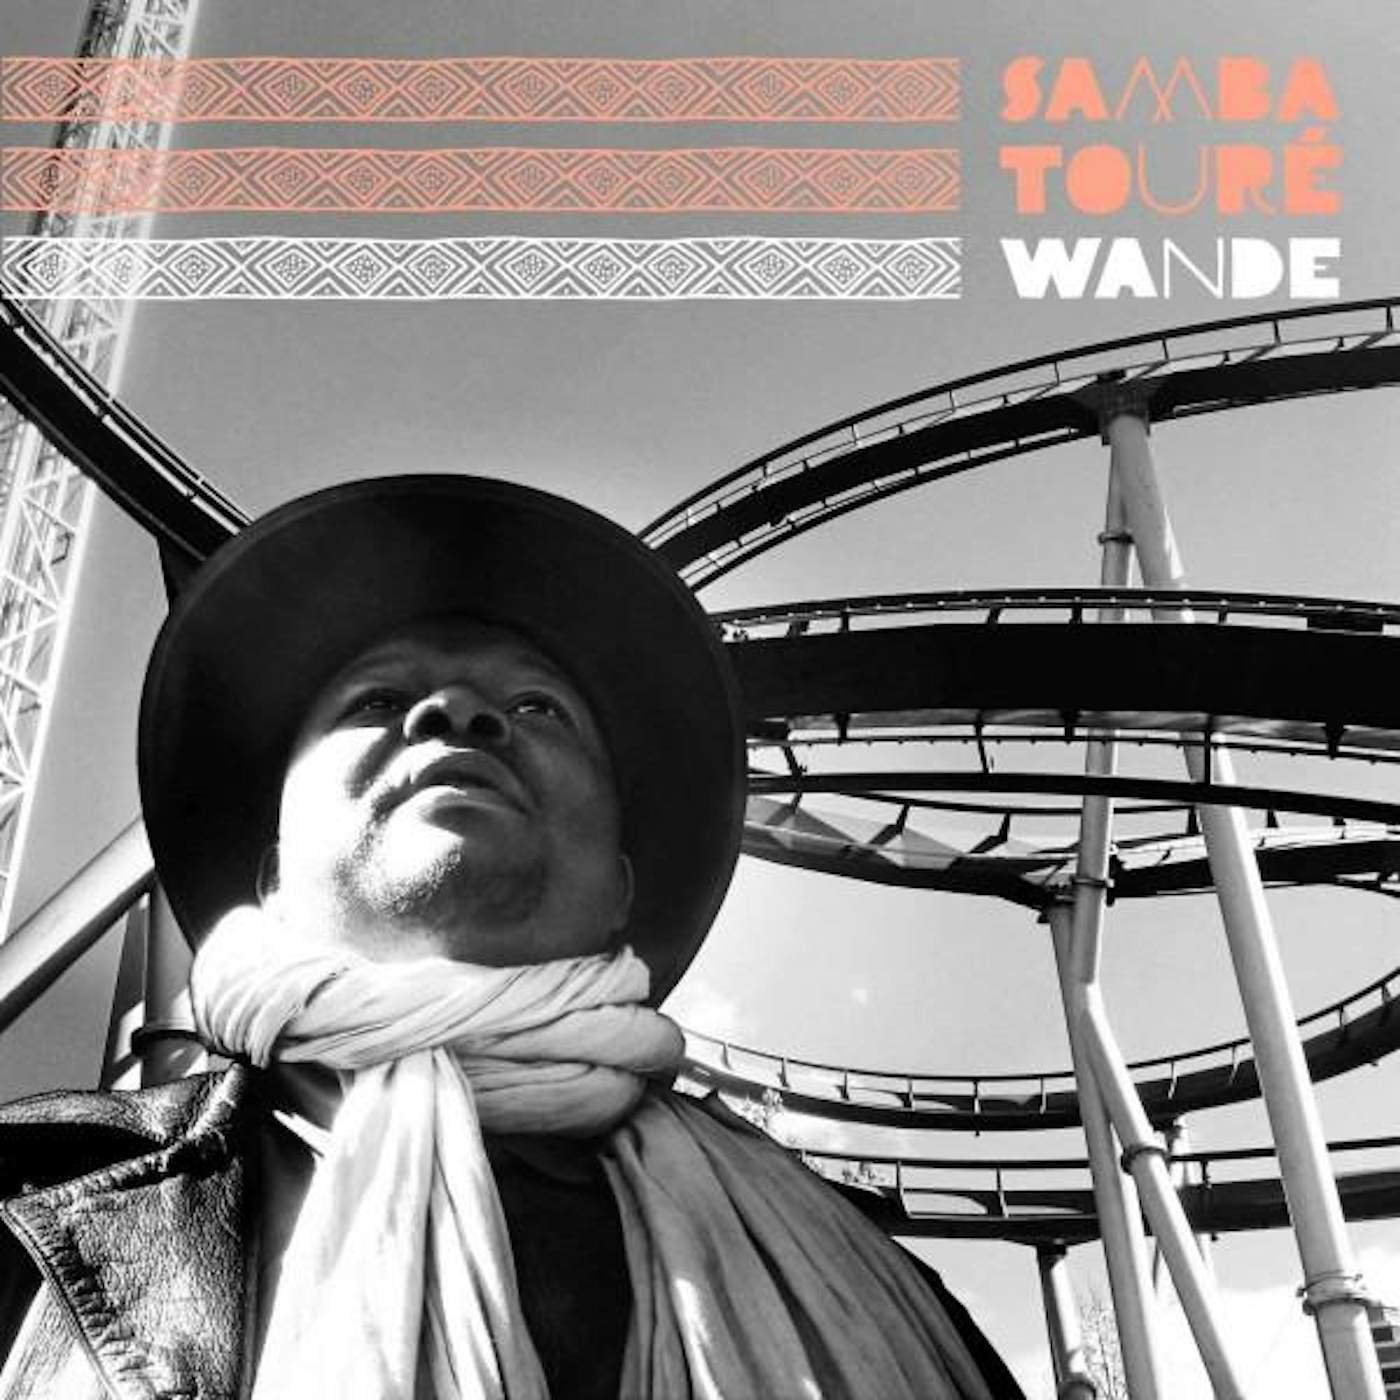 Samba Touré WANDE CD